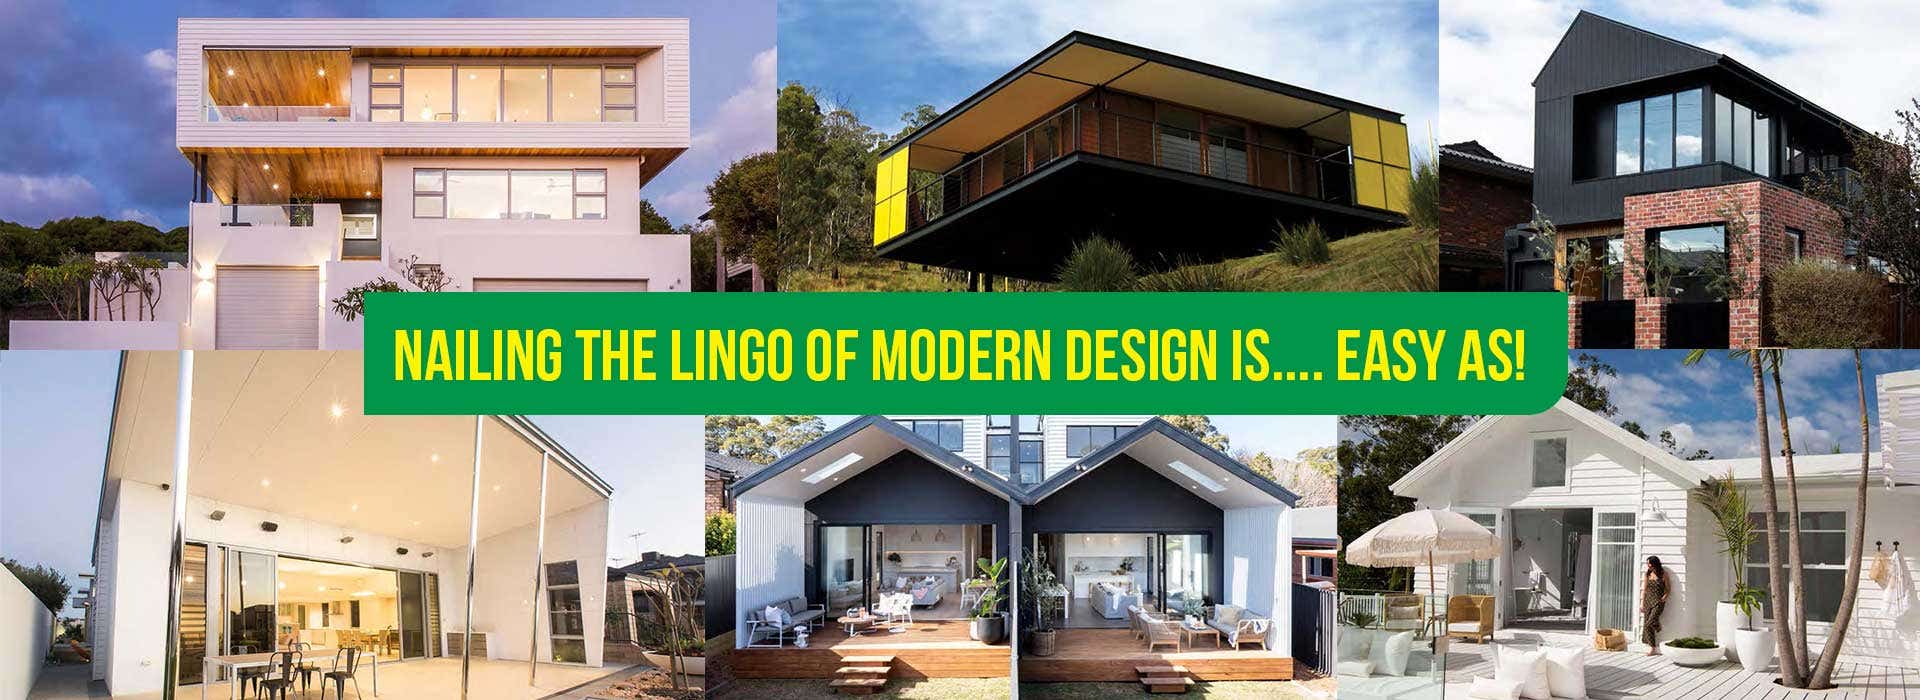 Modern home design